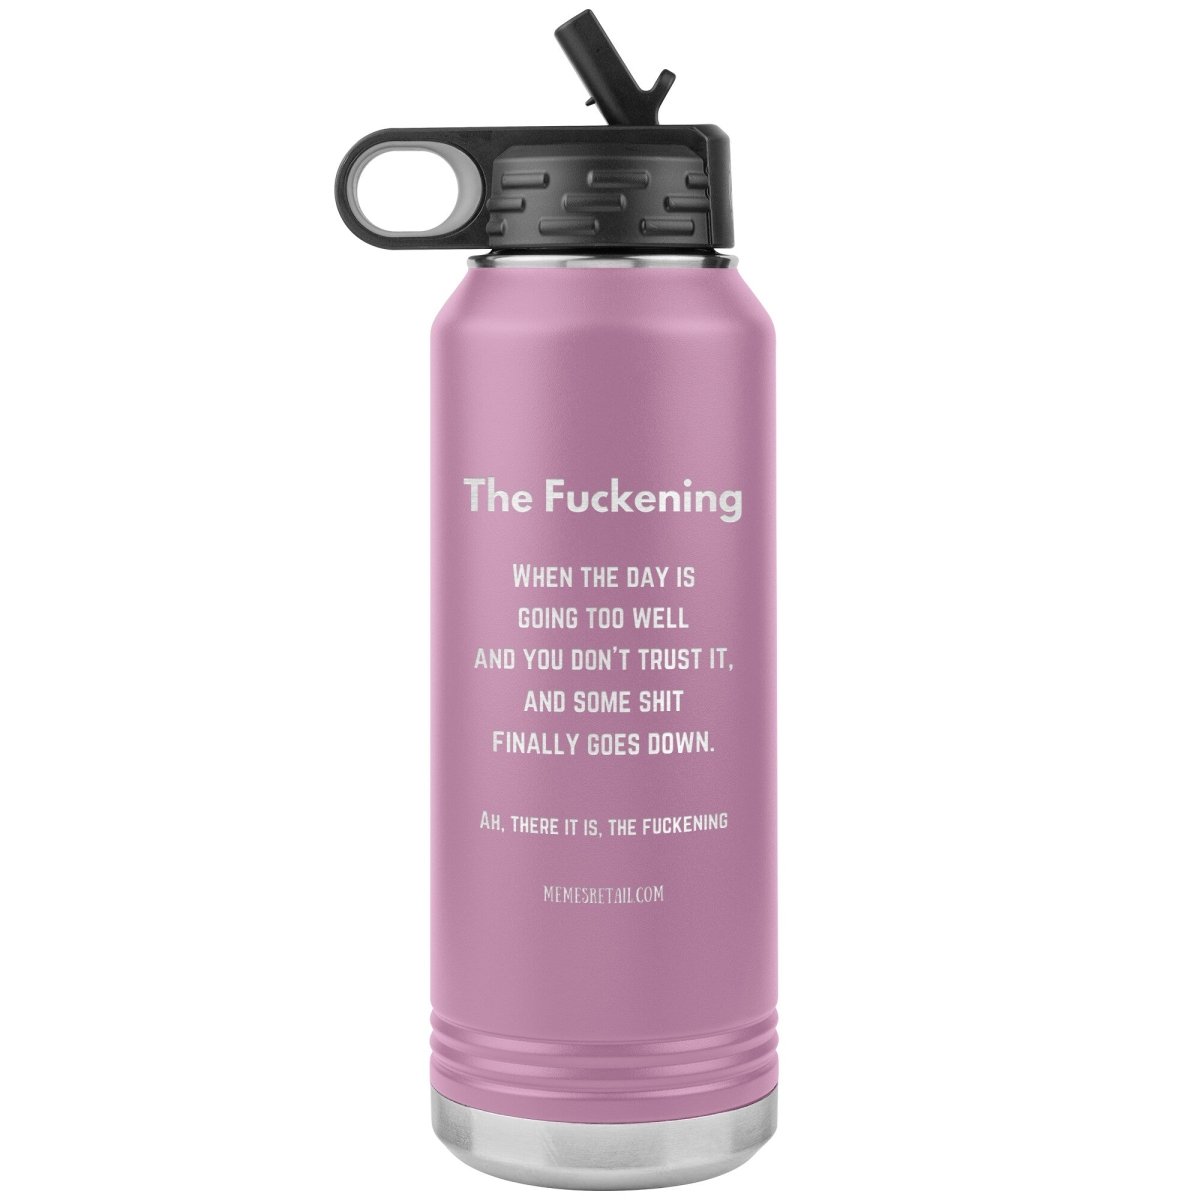 The Fuckening, When you don't trust the day. 32 oz Water Bottle, Light Purple - MemesRetail.com